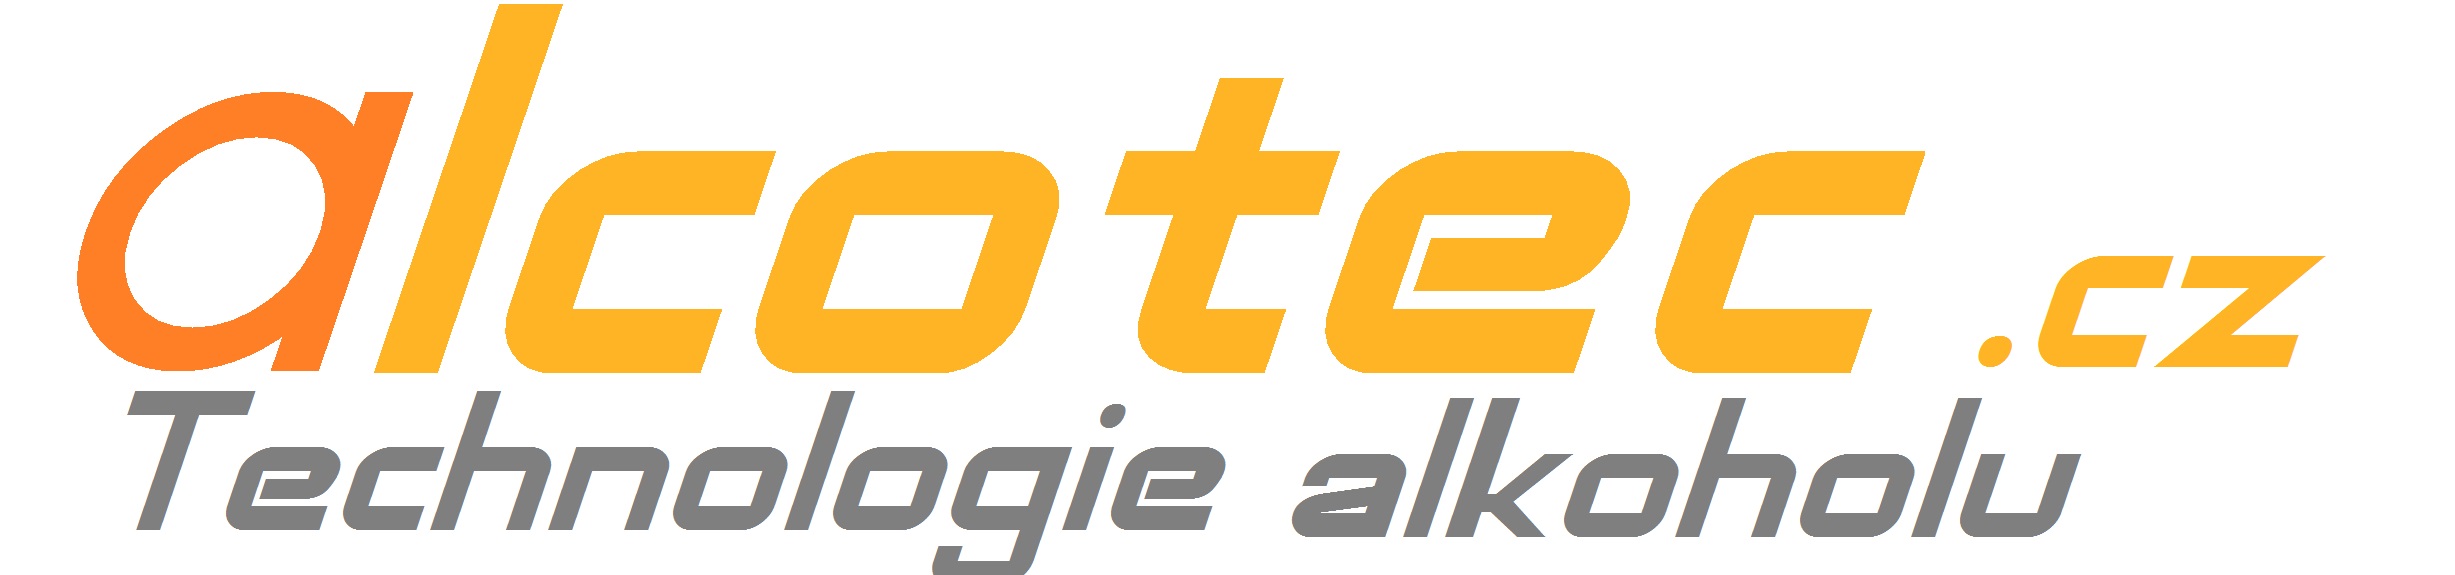 Alcotec.cz